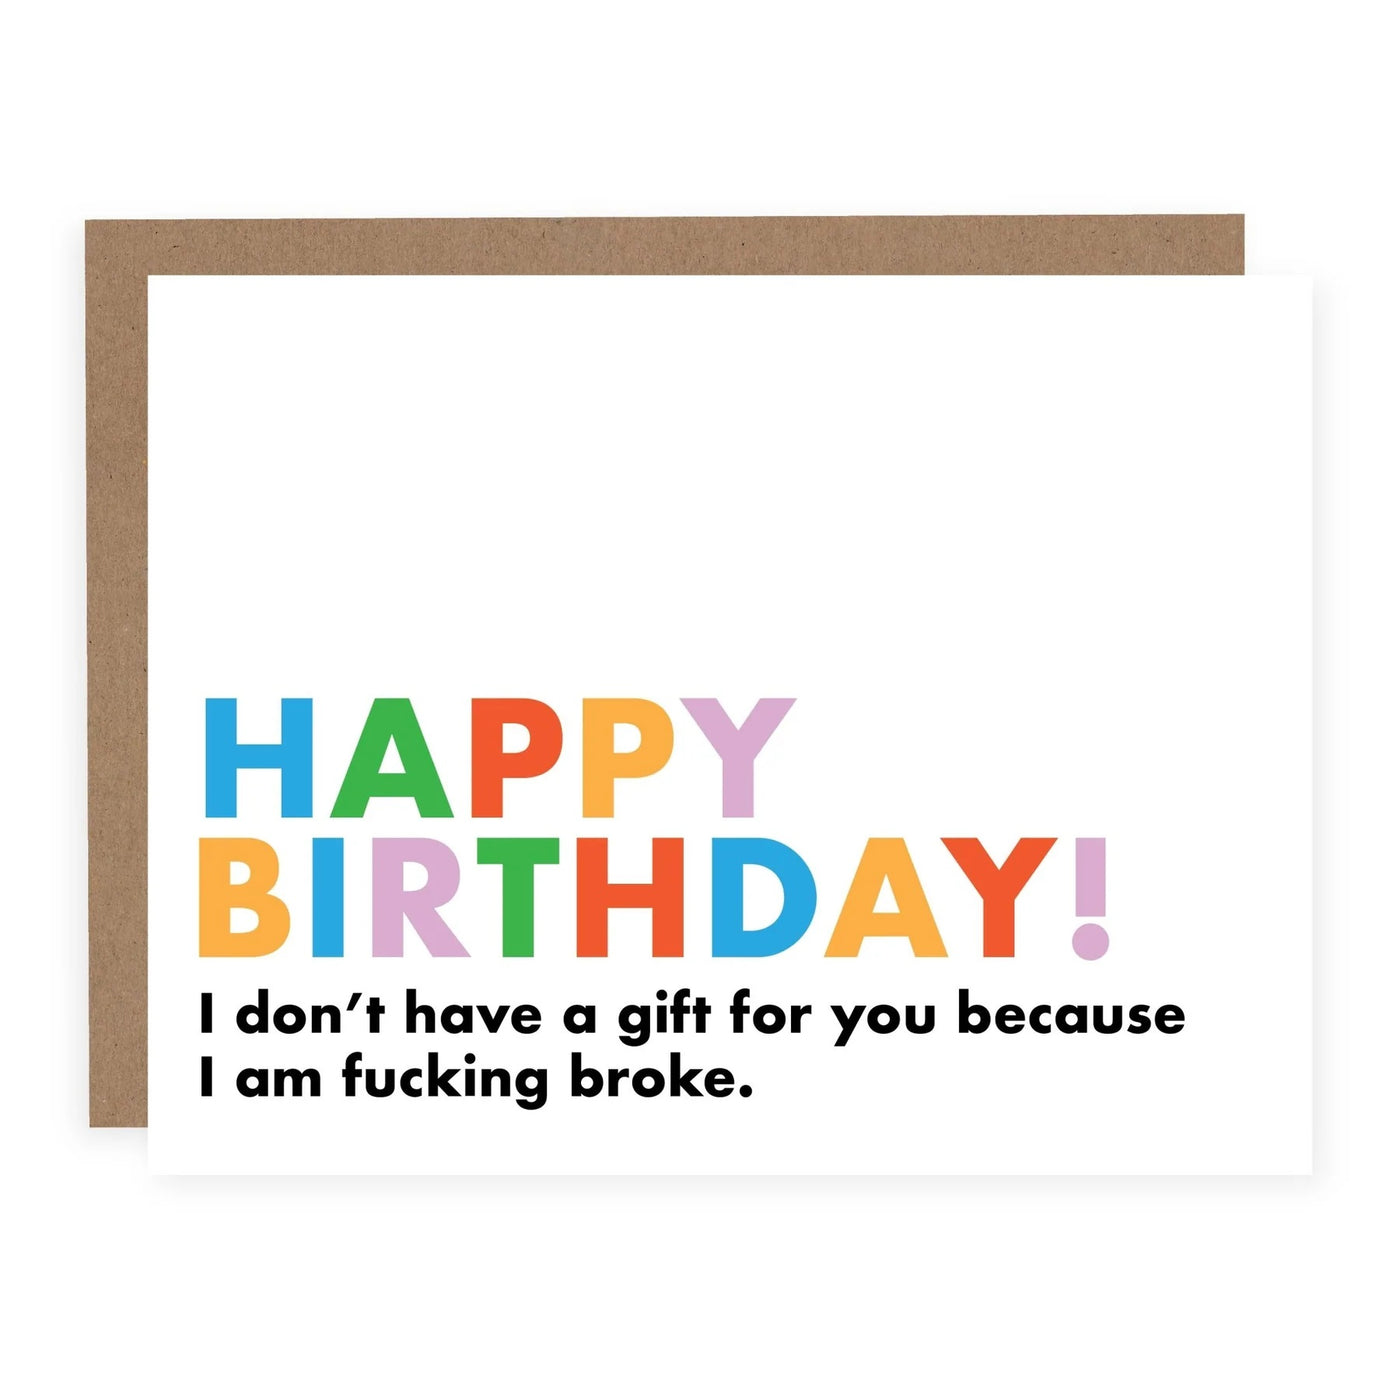 I AM FUCKING BROKE BIRTHDAY CARD